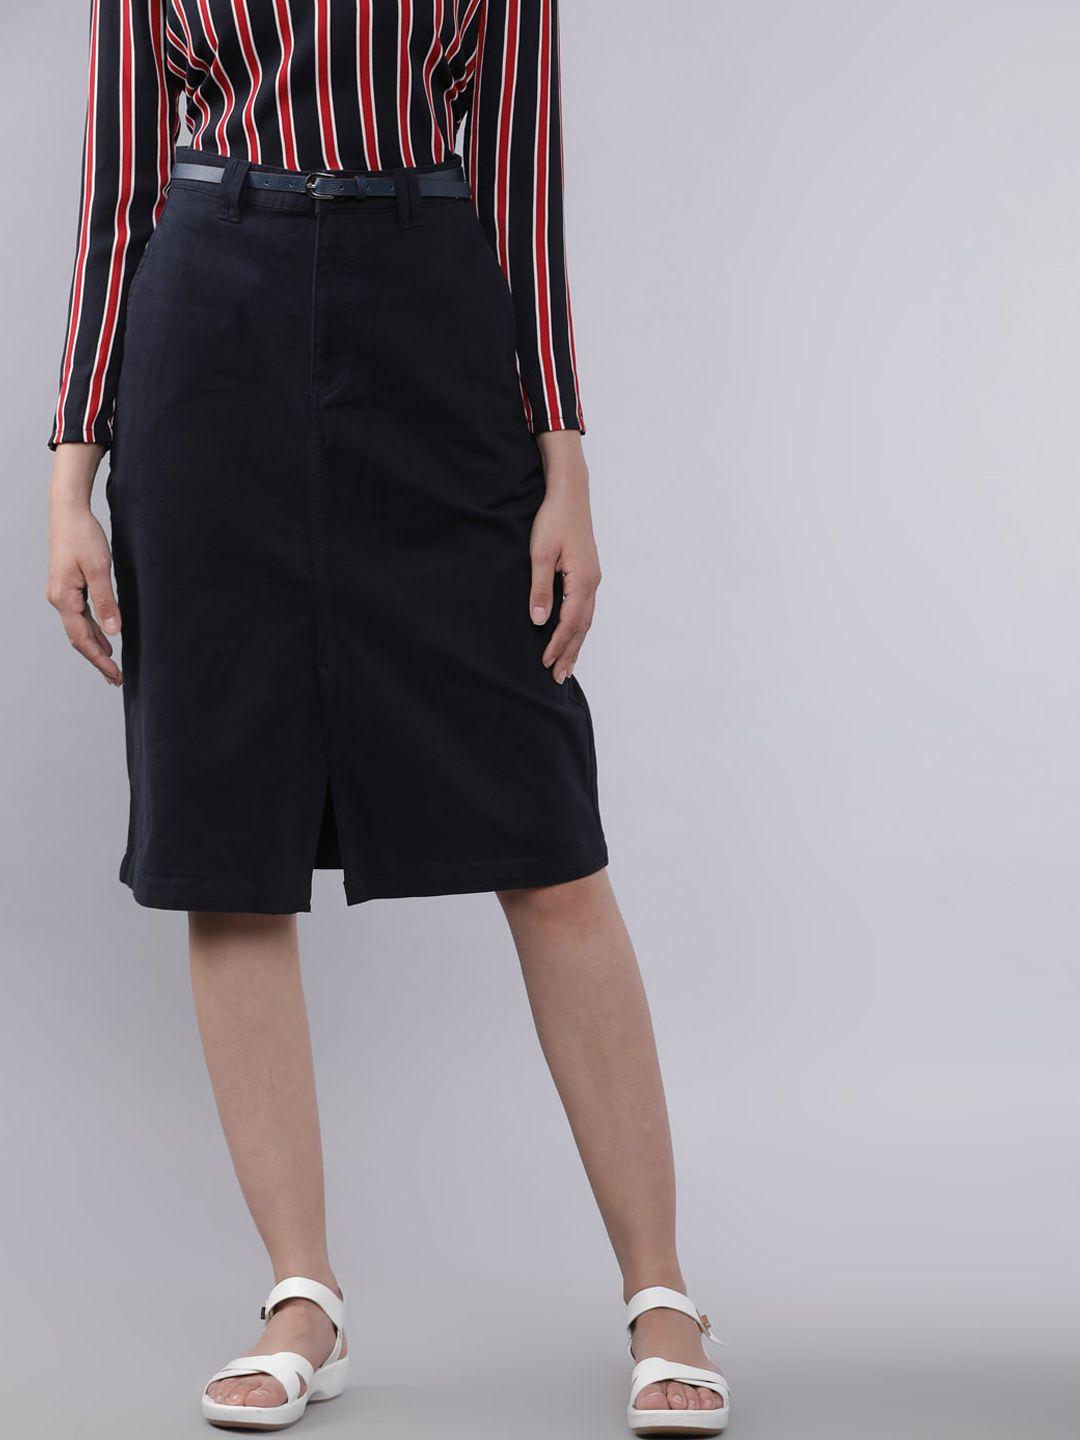 tokyo talkies women navy blue solid straight skirt with belt